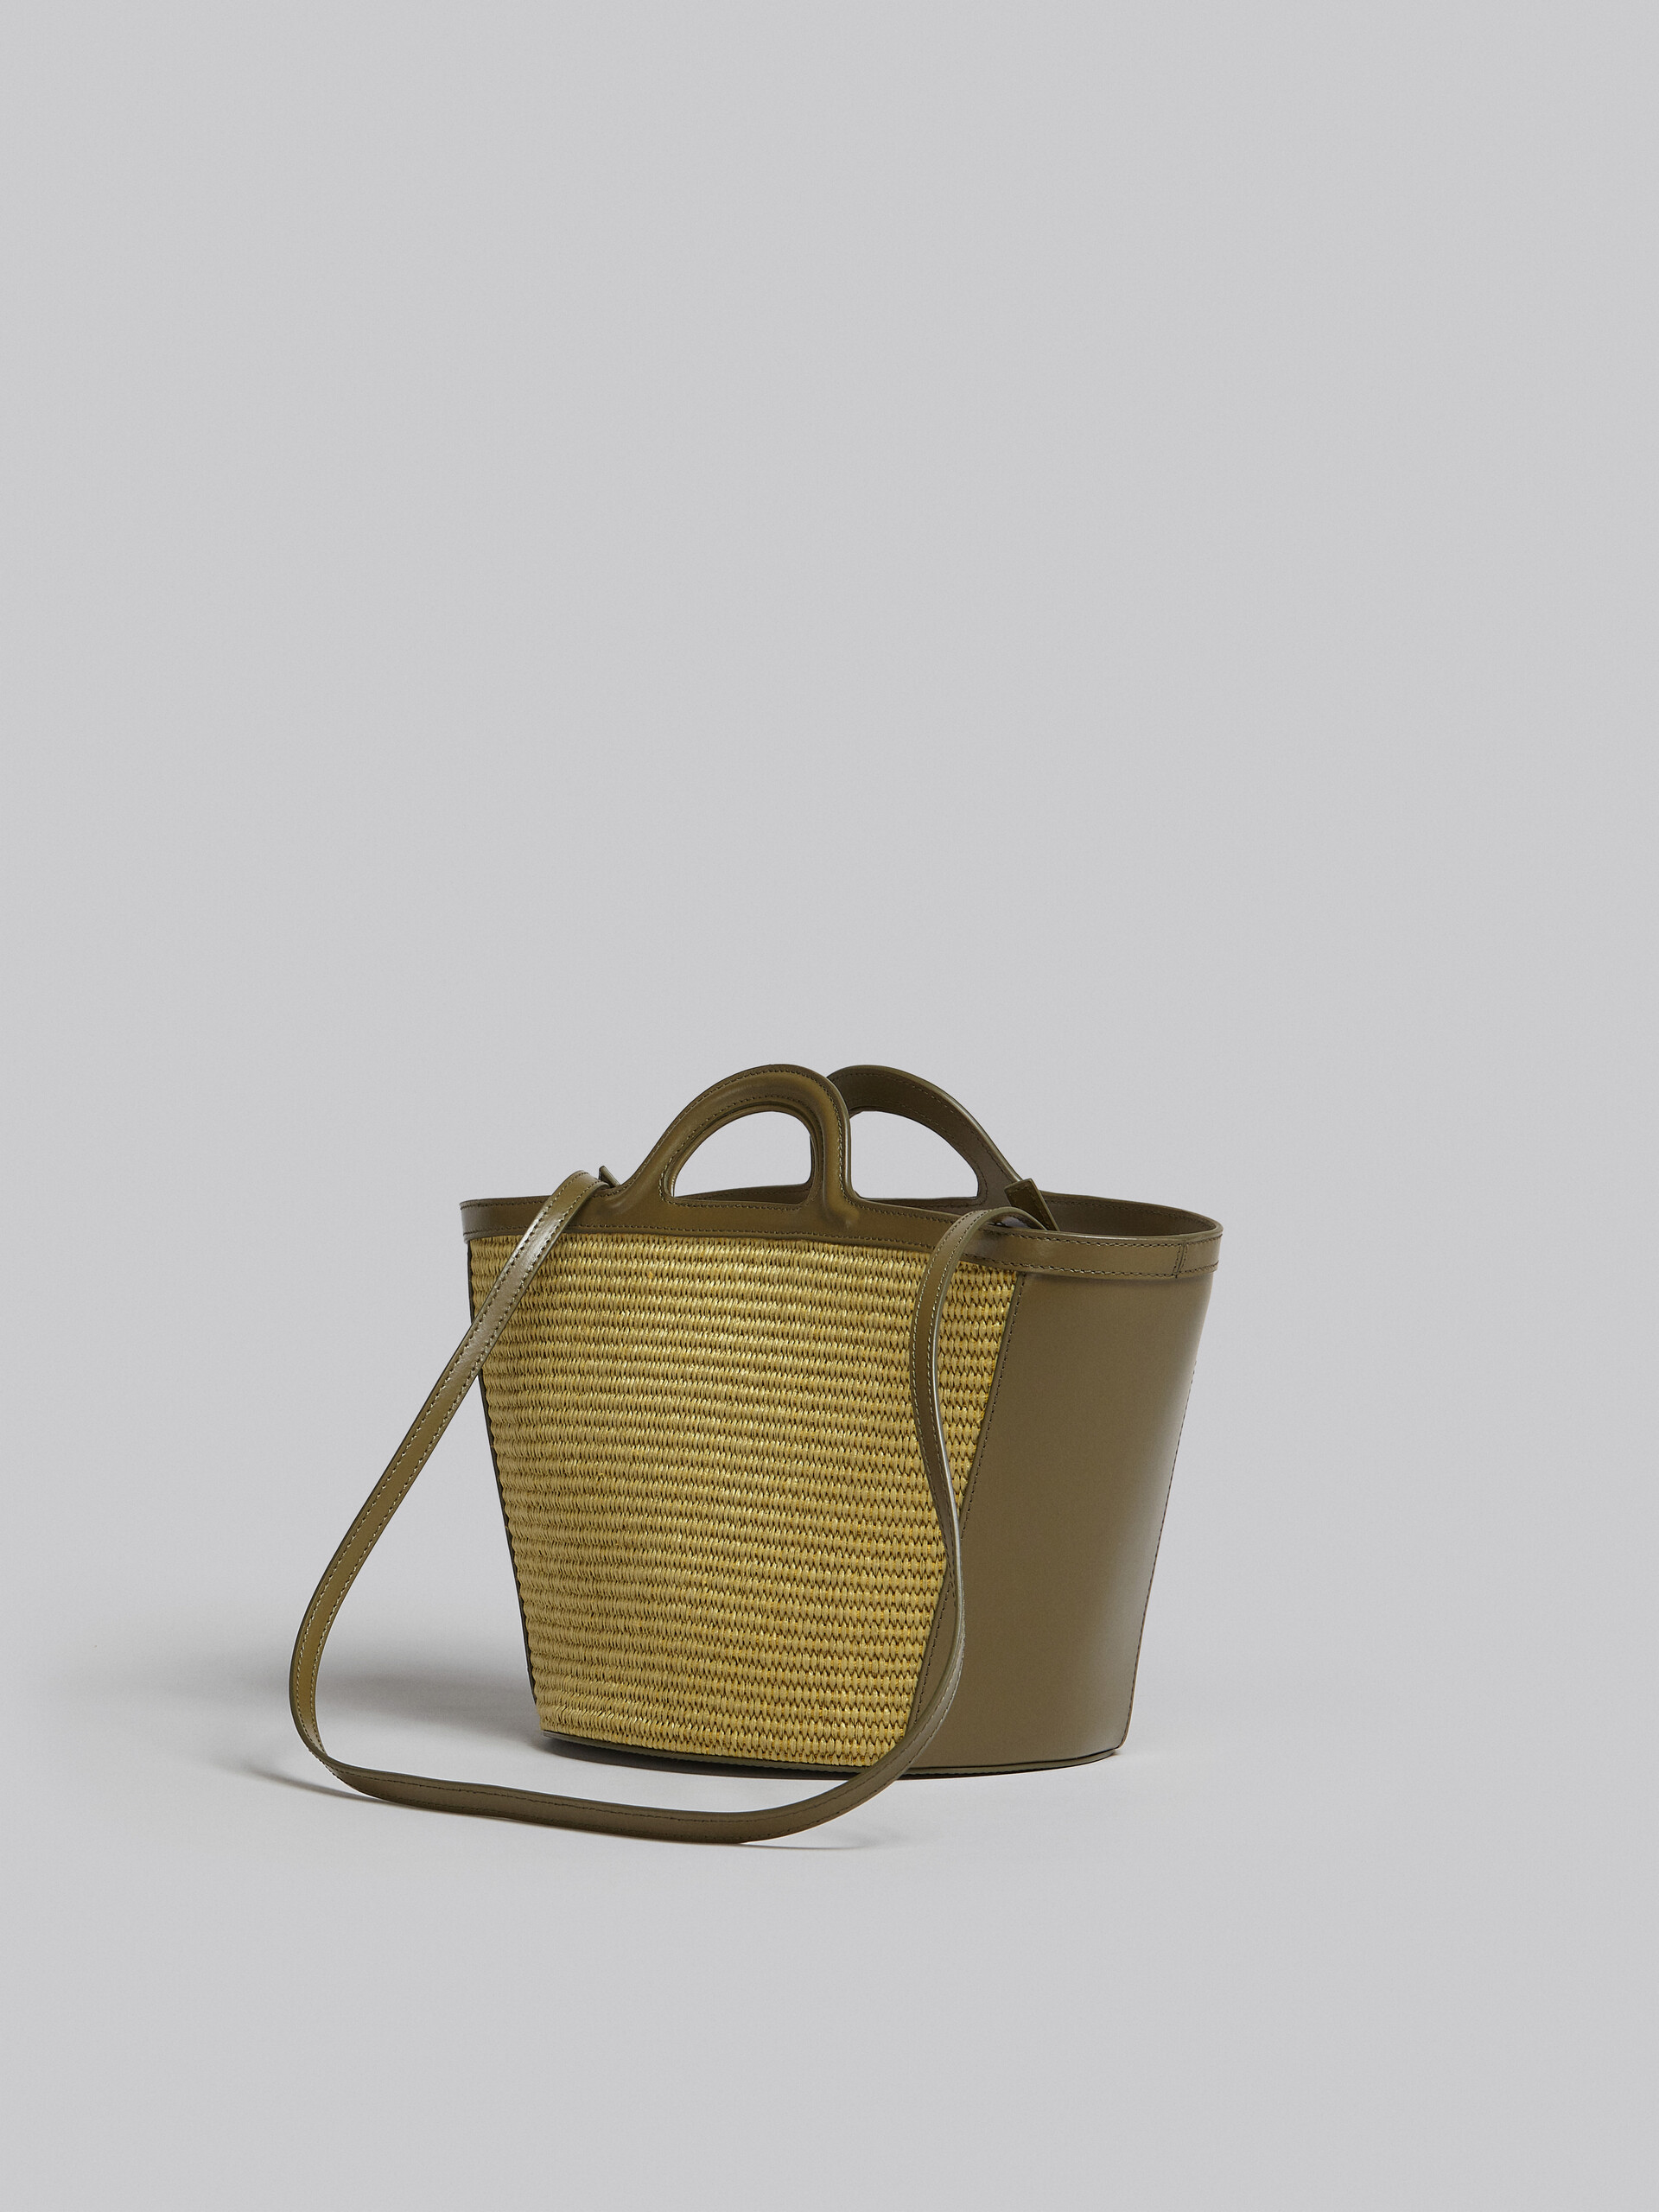 Tropicalia Small Bag in olive green leather and raffia - Handbag - Image 3